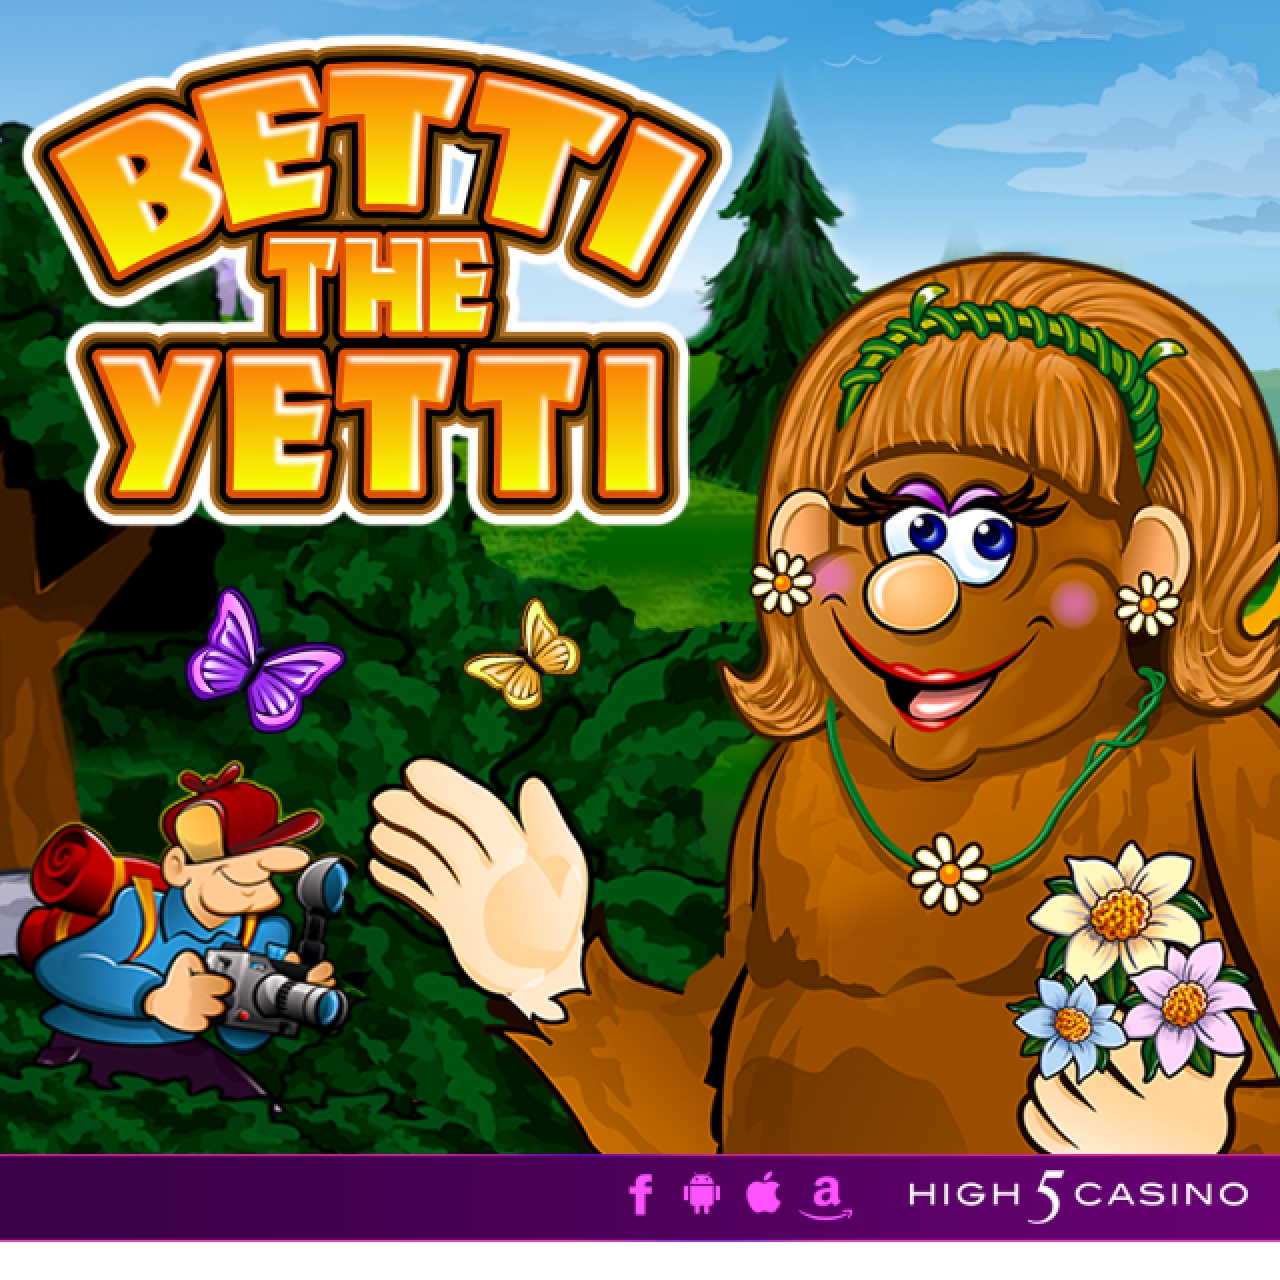 Betti the Yetti demo